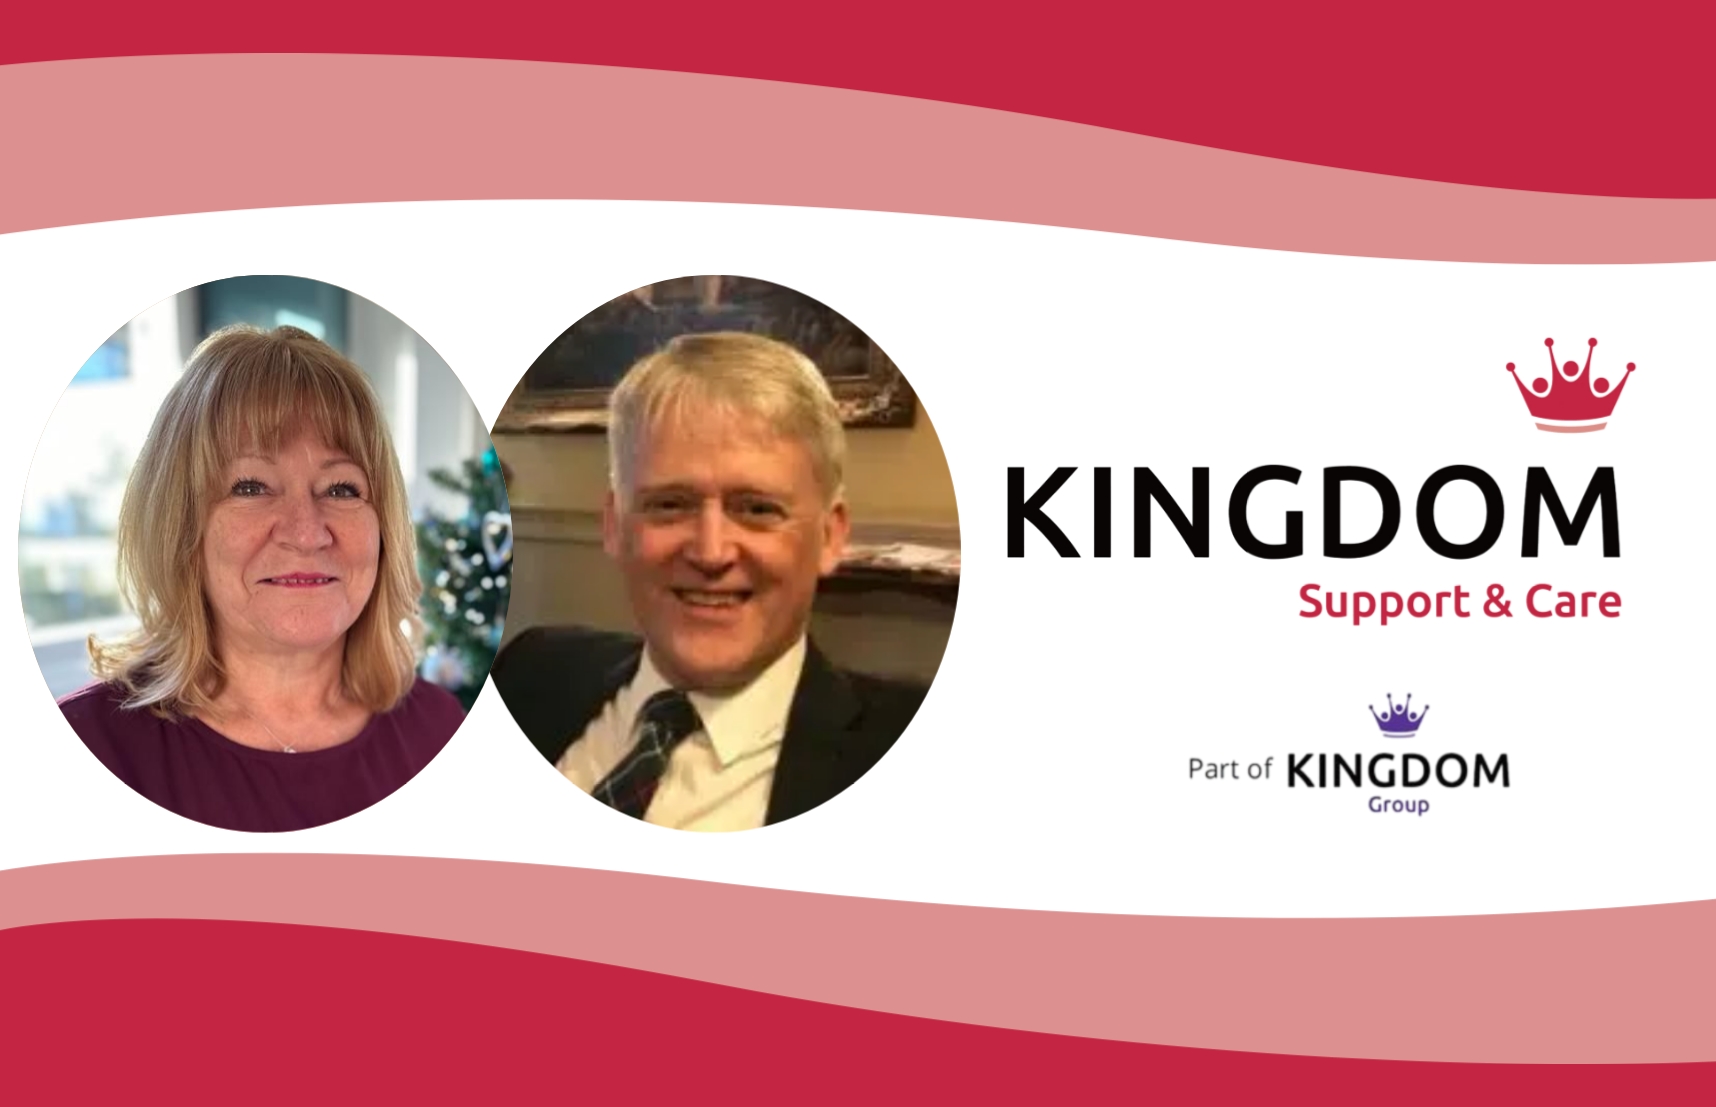 Karen Koyman re-elected as Kingdom Support & Care chair